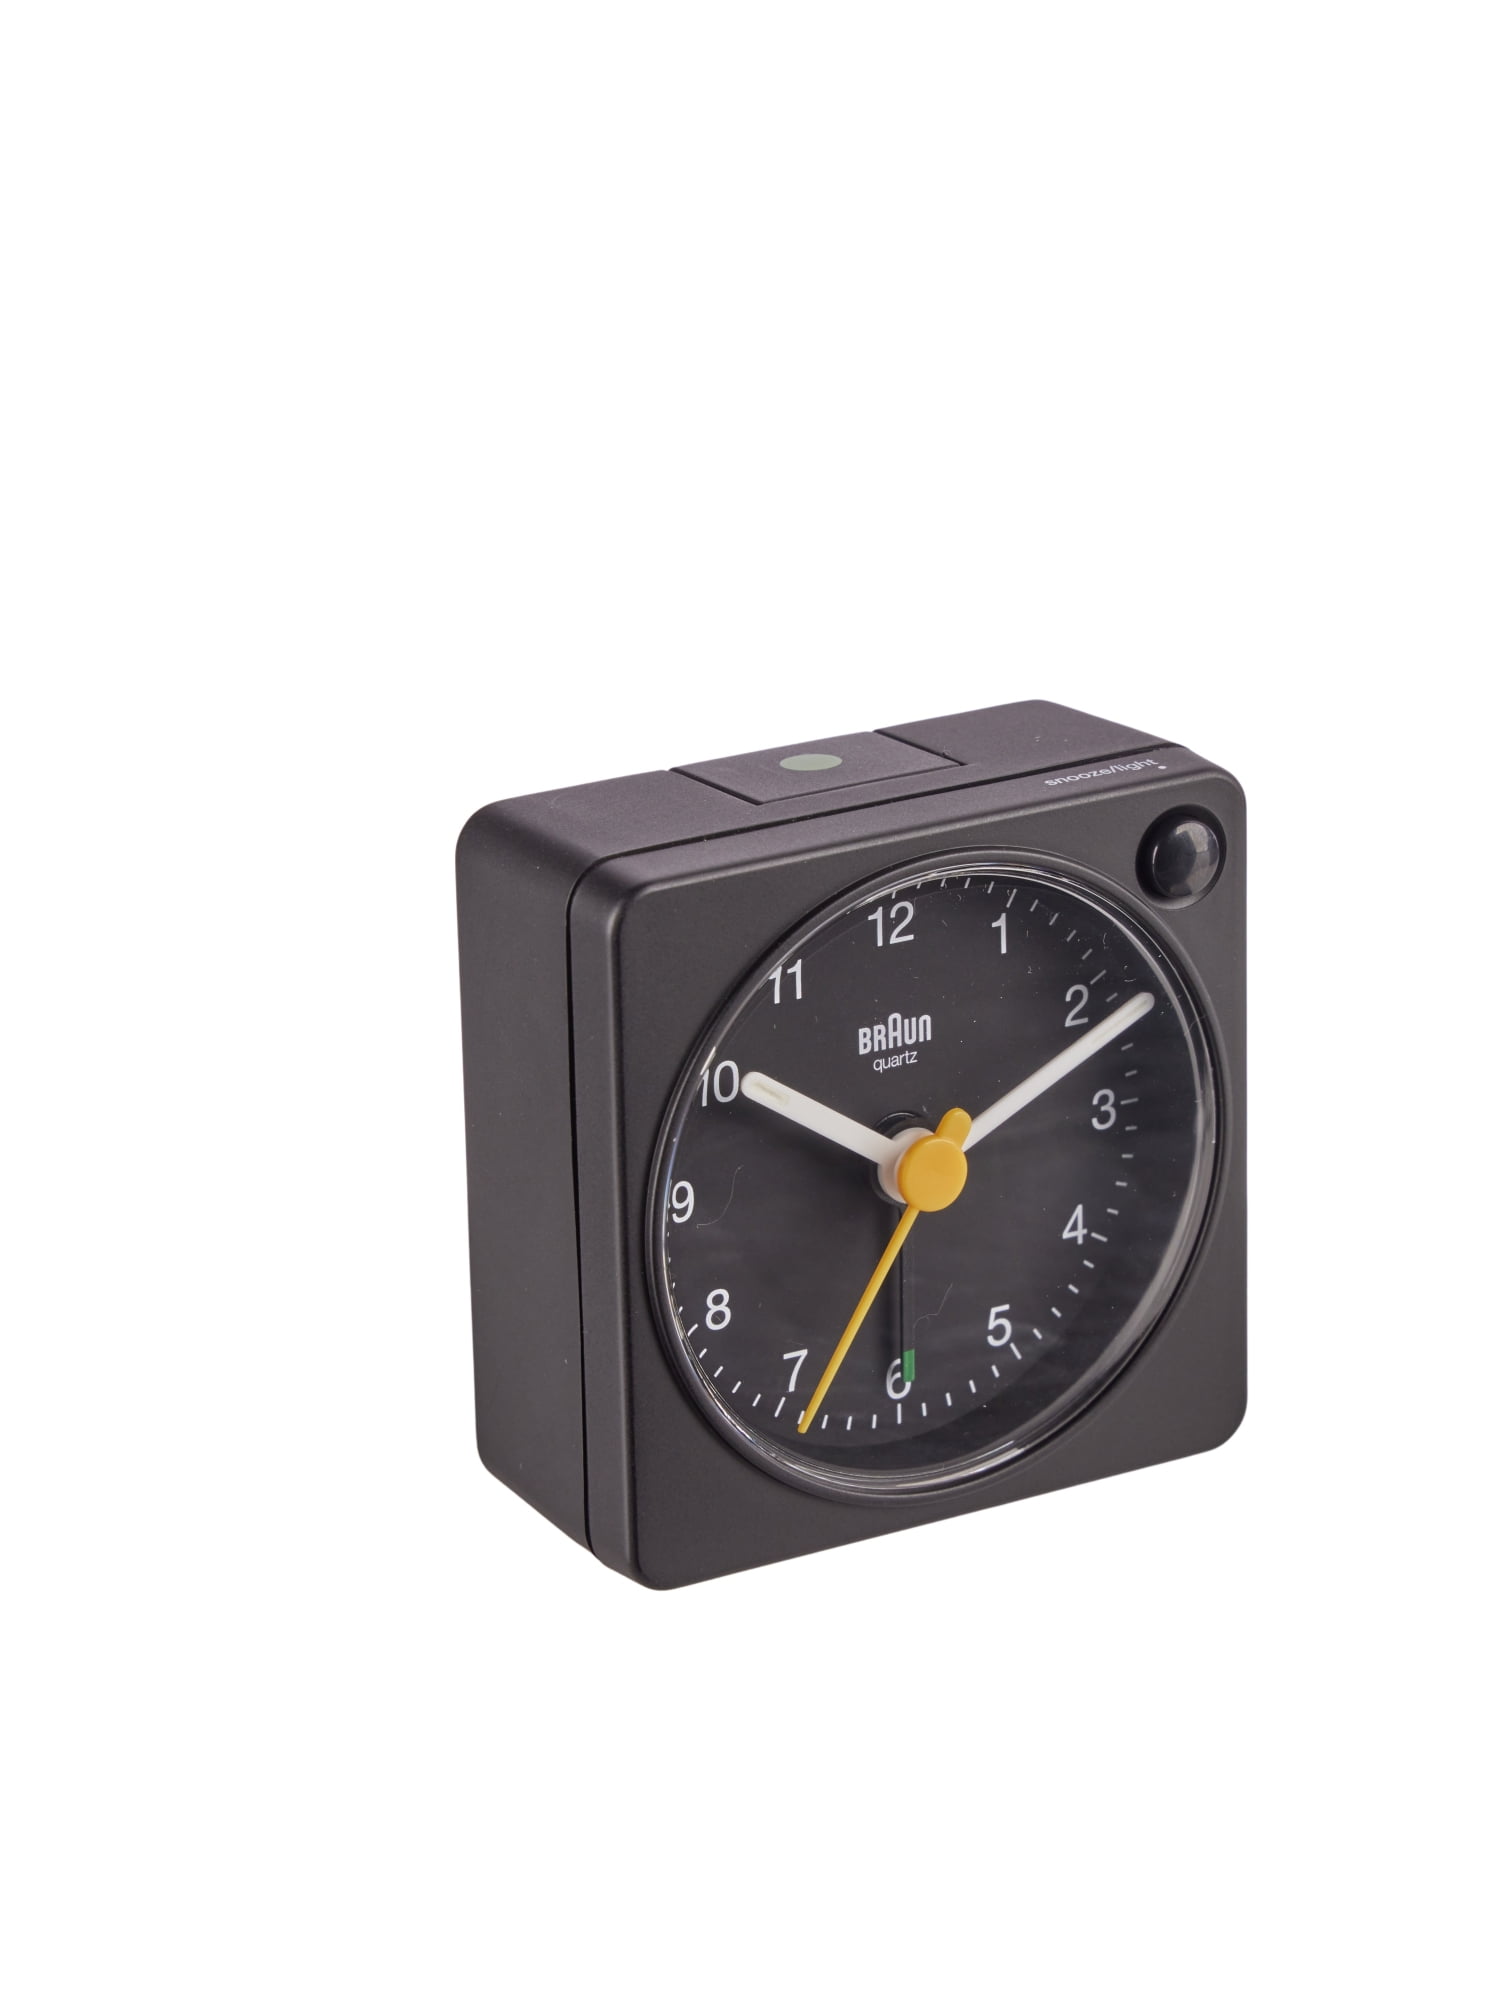 strand tellen Prik Braun Classic Travel Analogue Clock with Snooze and Light, Compact Size,  Quiet Quartz Movement, Crescendo Beep Alarm in Black, Model BC02XB, One -  Walmart.com